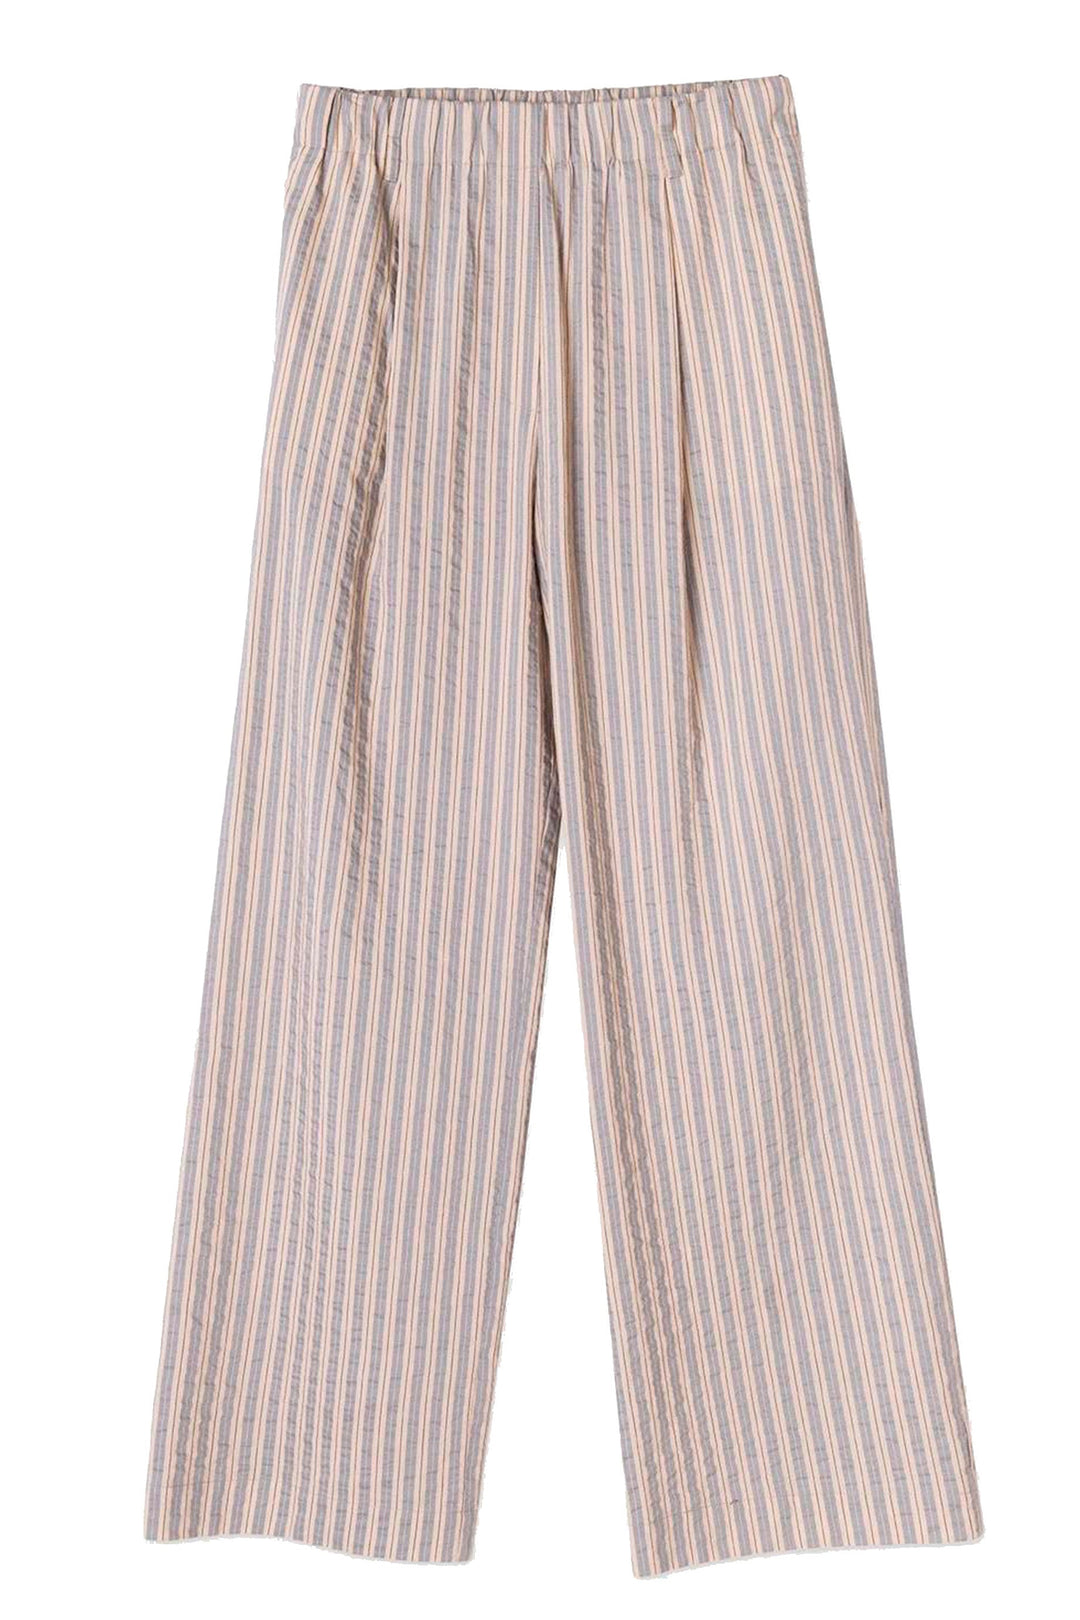 Alysi Stripe Trouser - Stripe